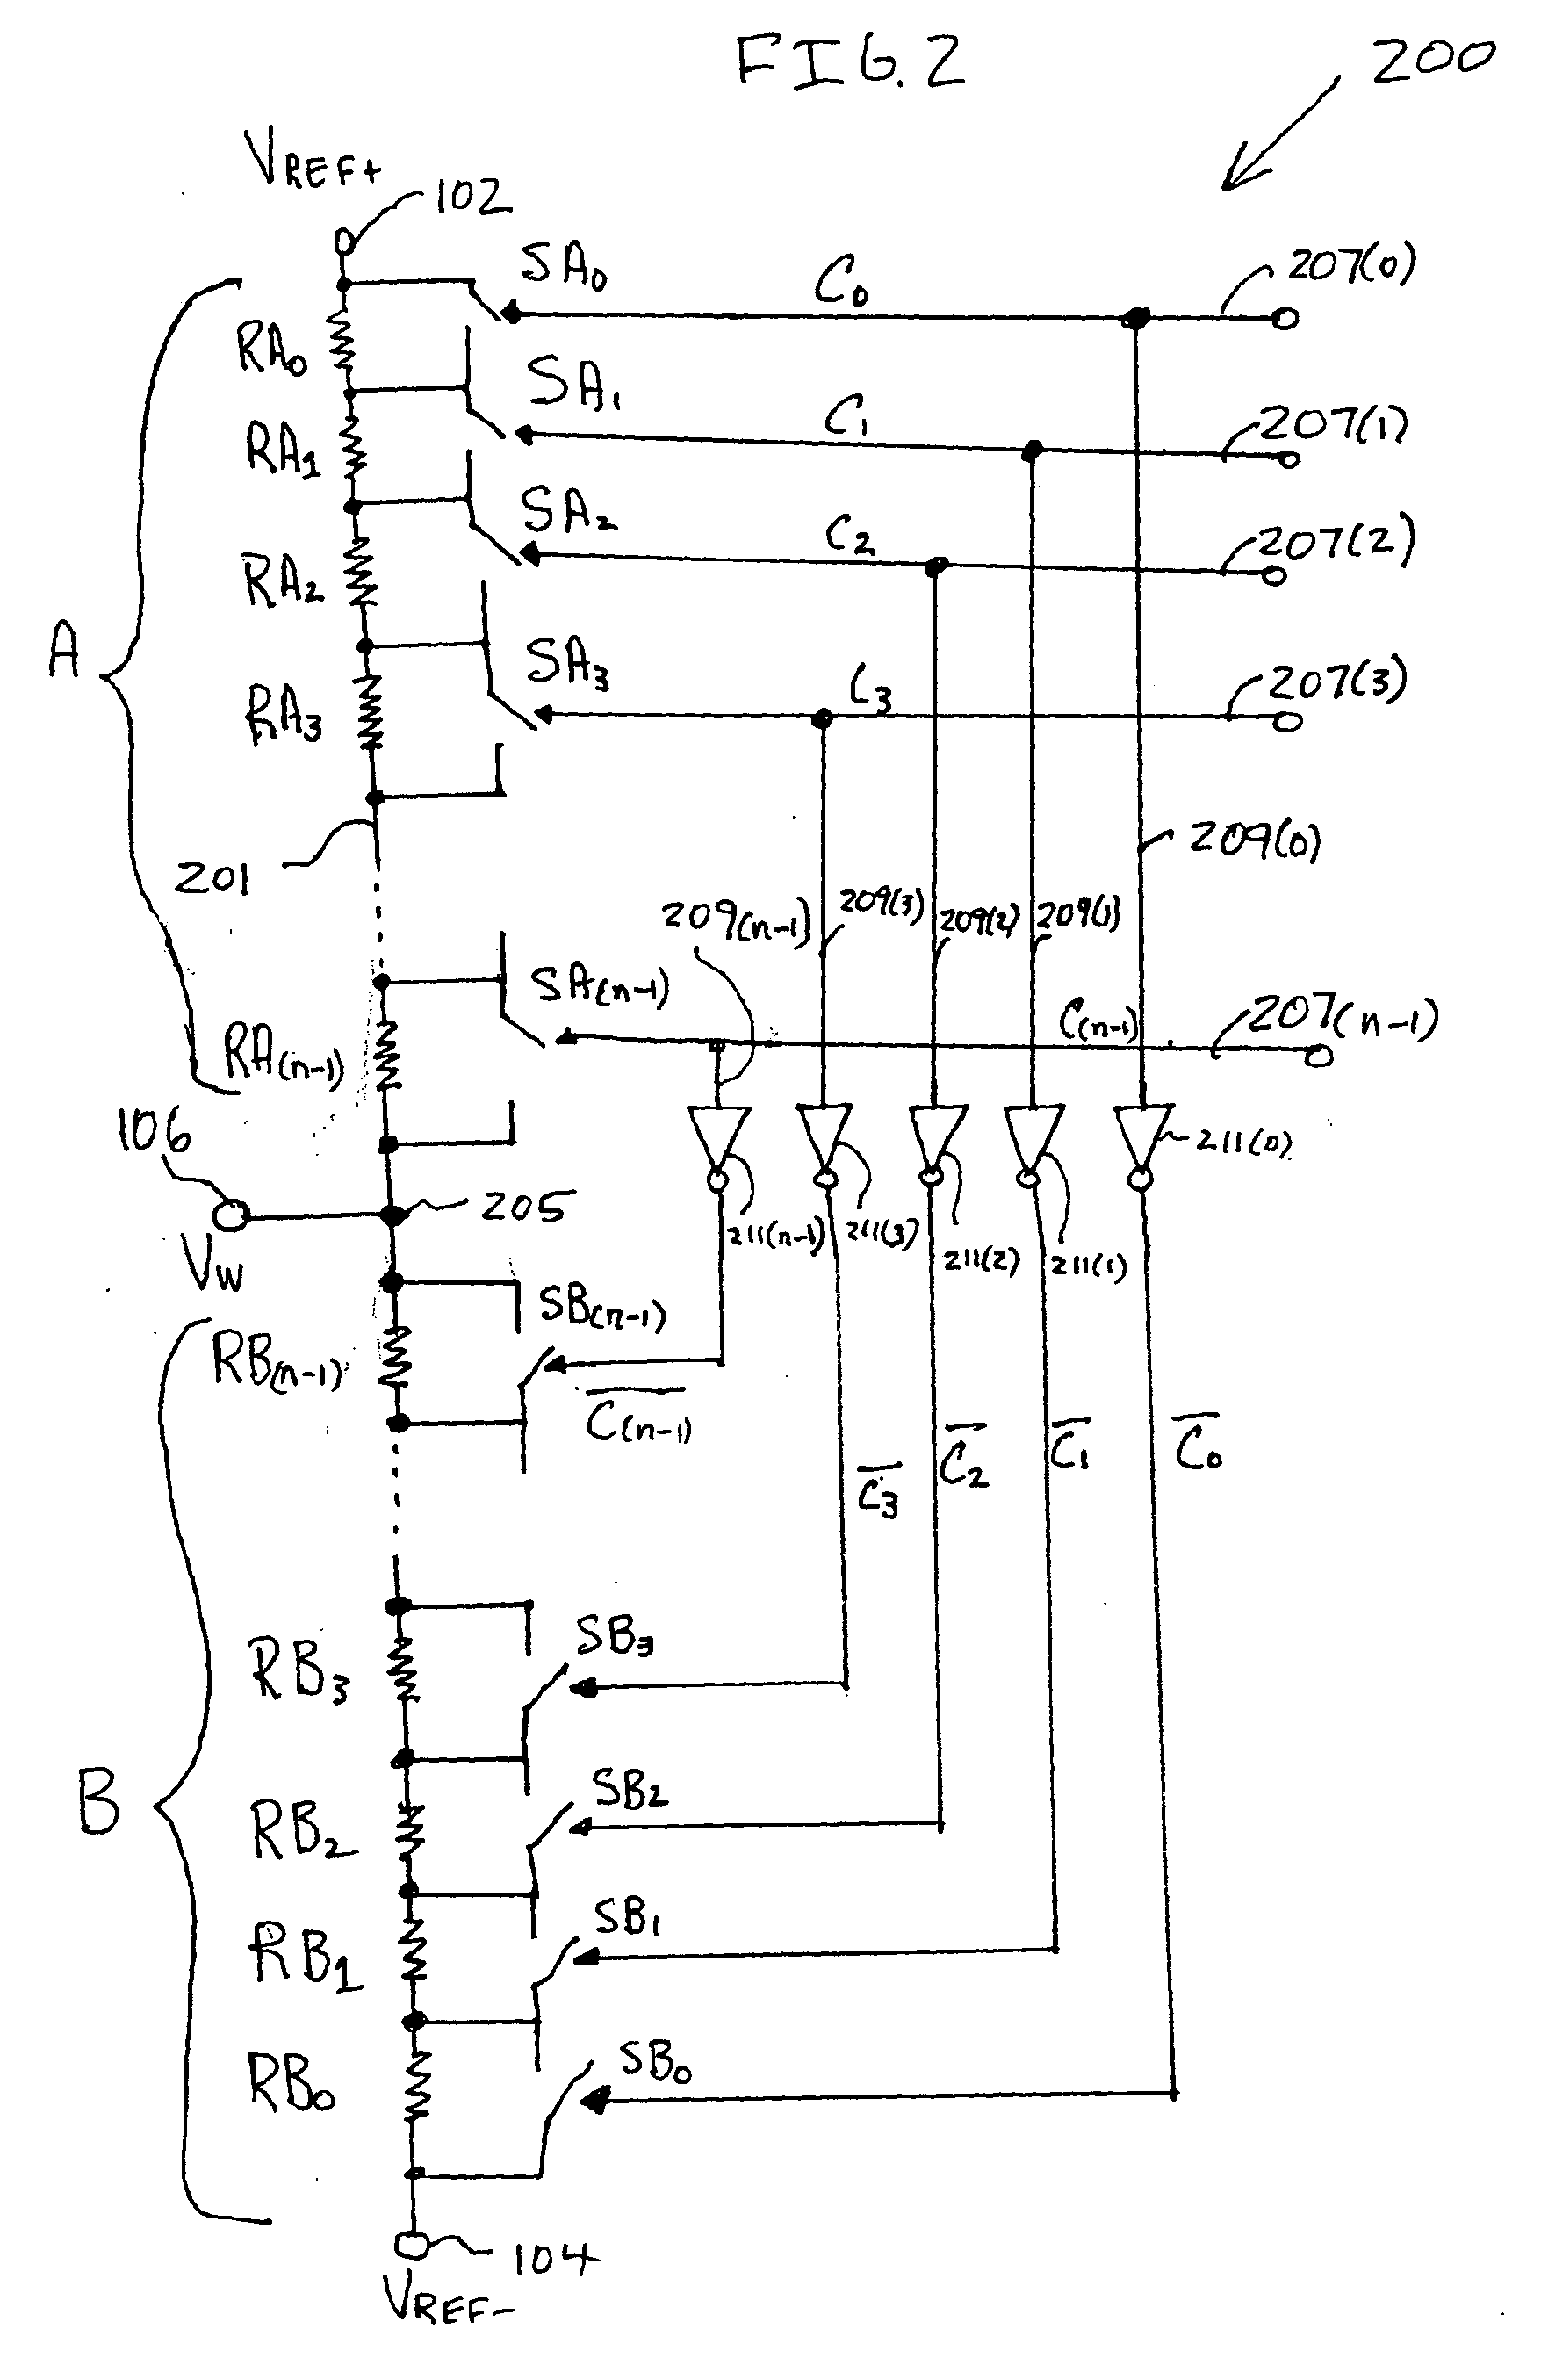 Digital potentiometer with resistor binary weighting decoding